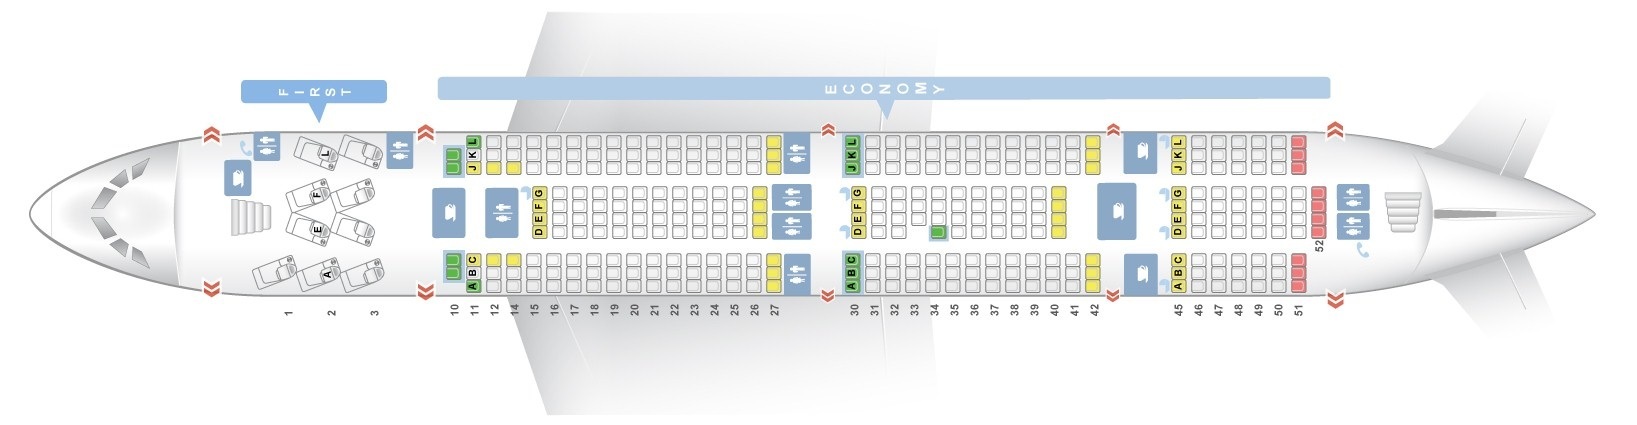 Air France Flight 65 Seating Chart